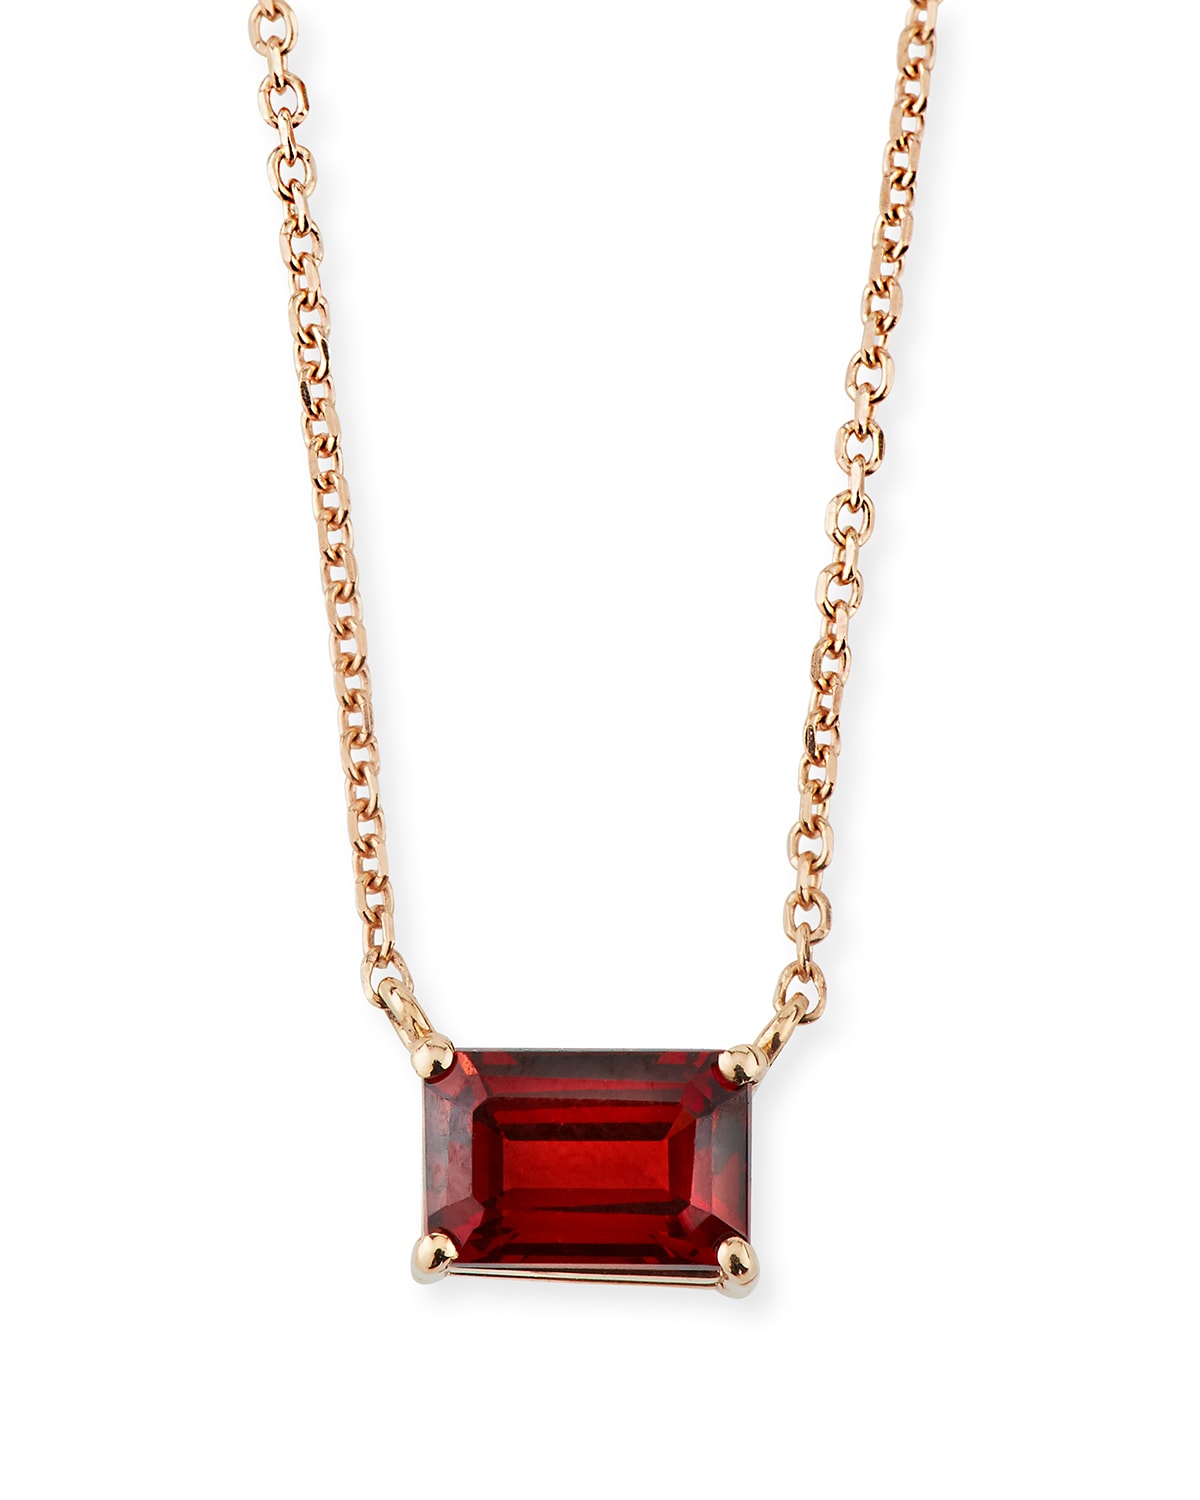 KALAN by Suzanne Kalan Amalfi 14K Rose Gold Emerald-Cut Necklace